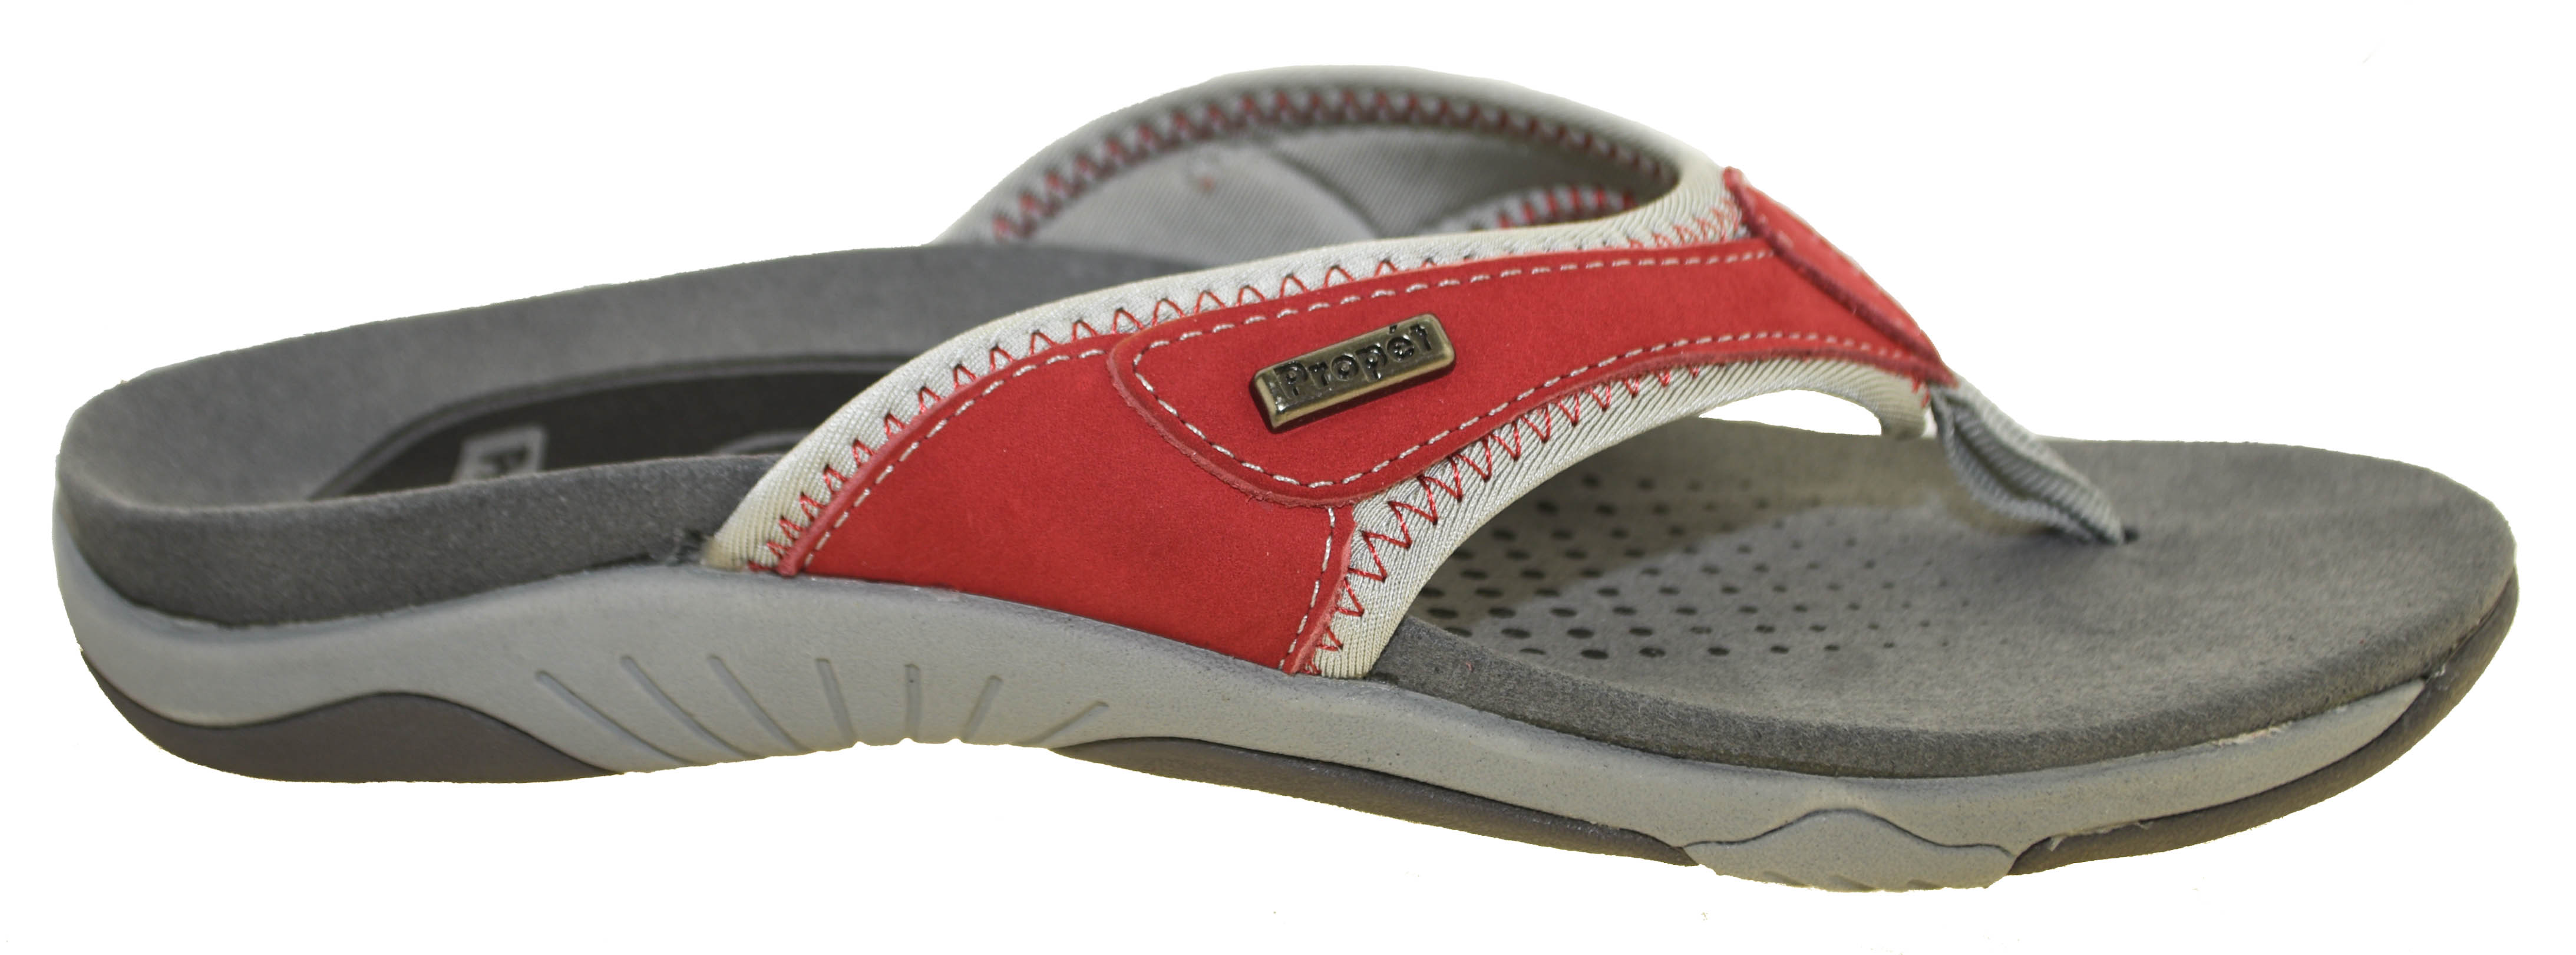 propet women's hartley sandal